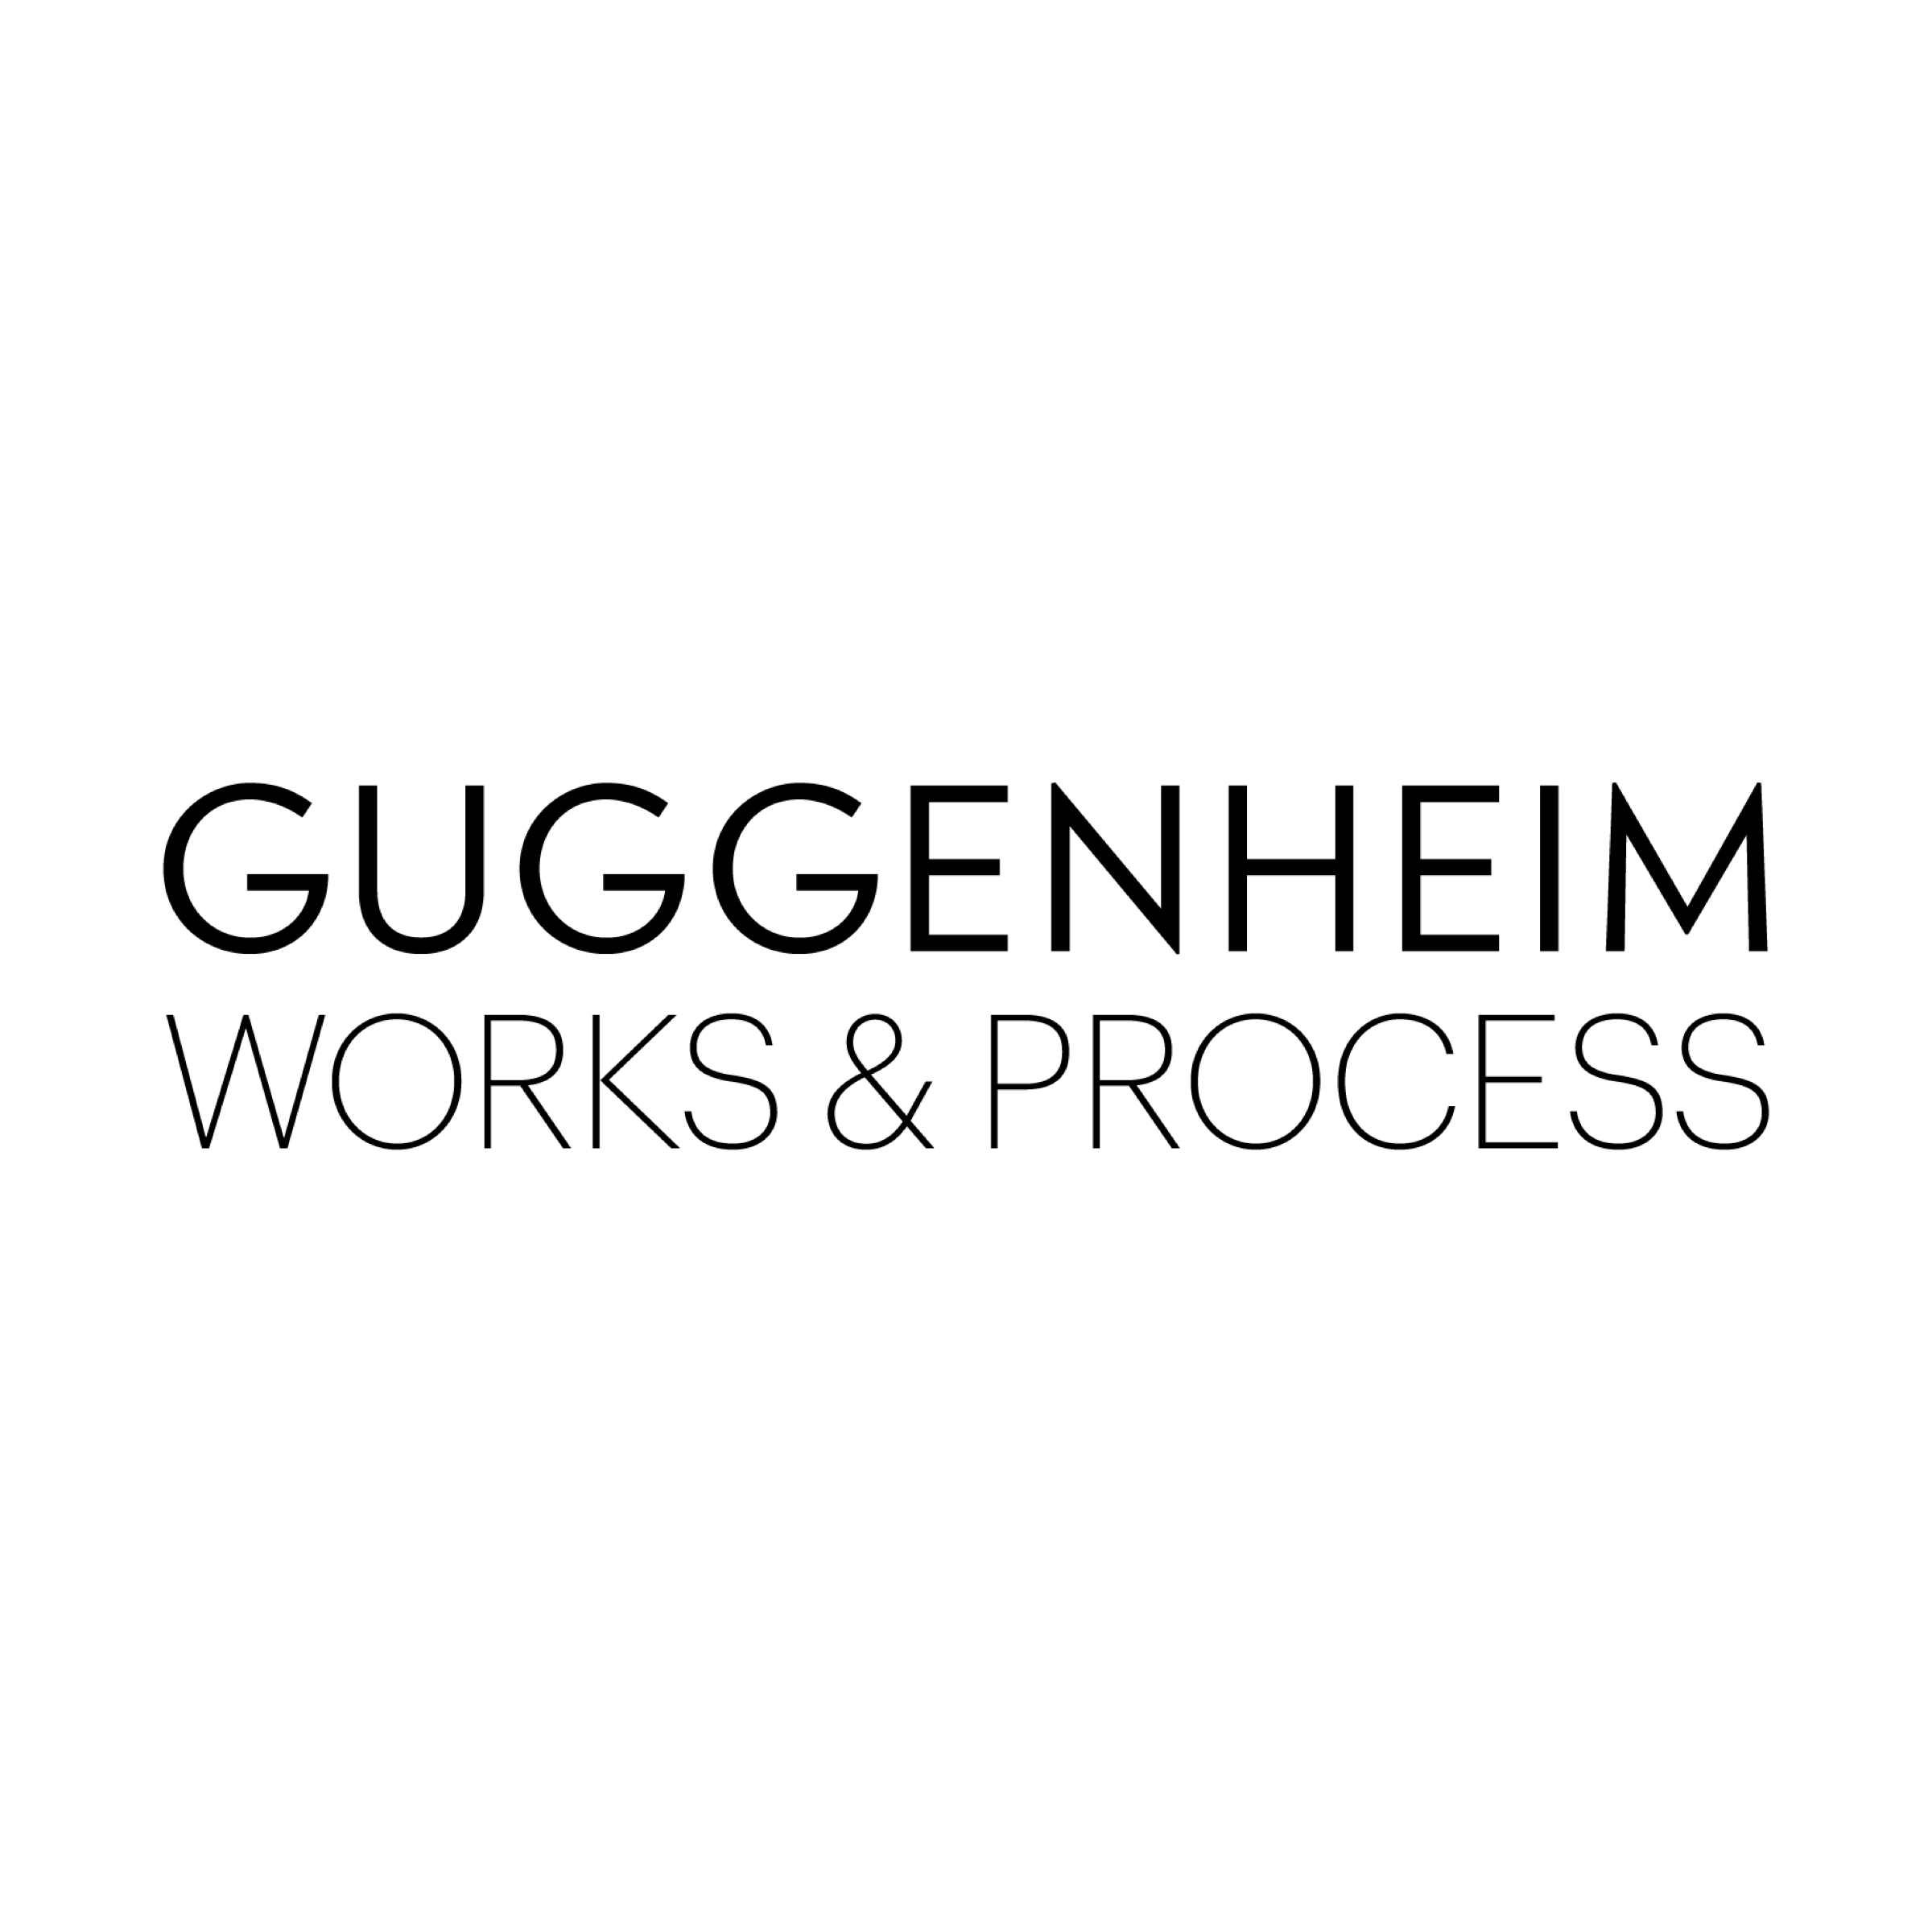 Guggenheim Works & Process